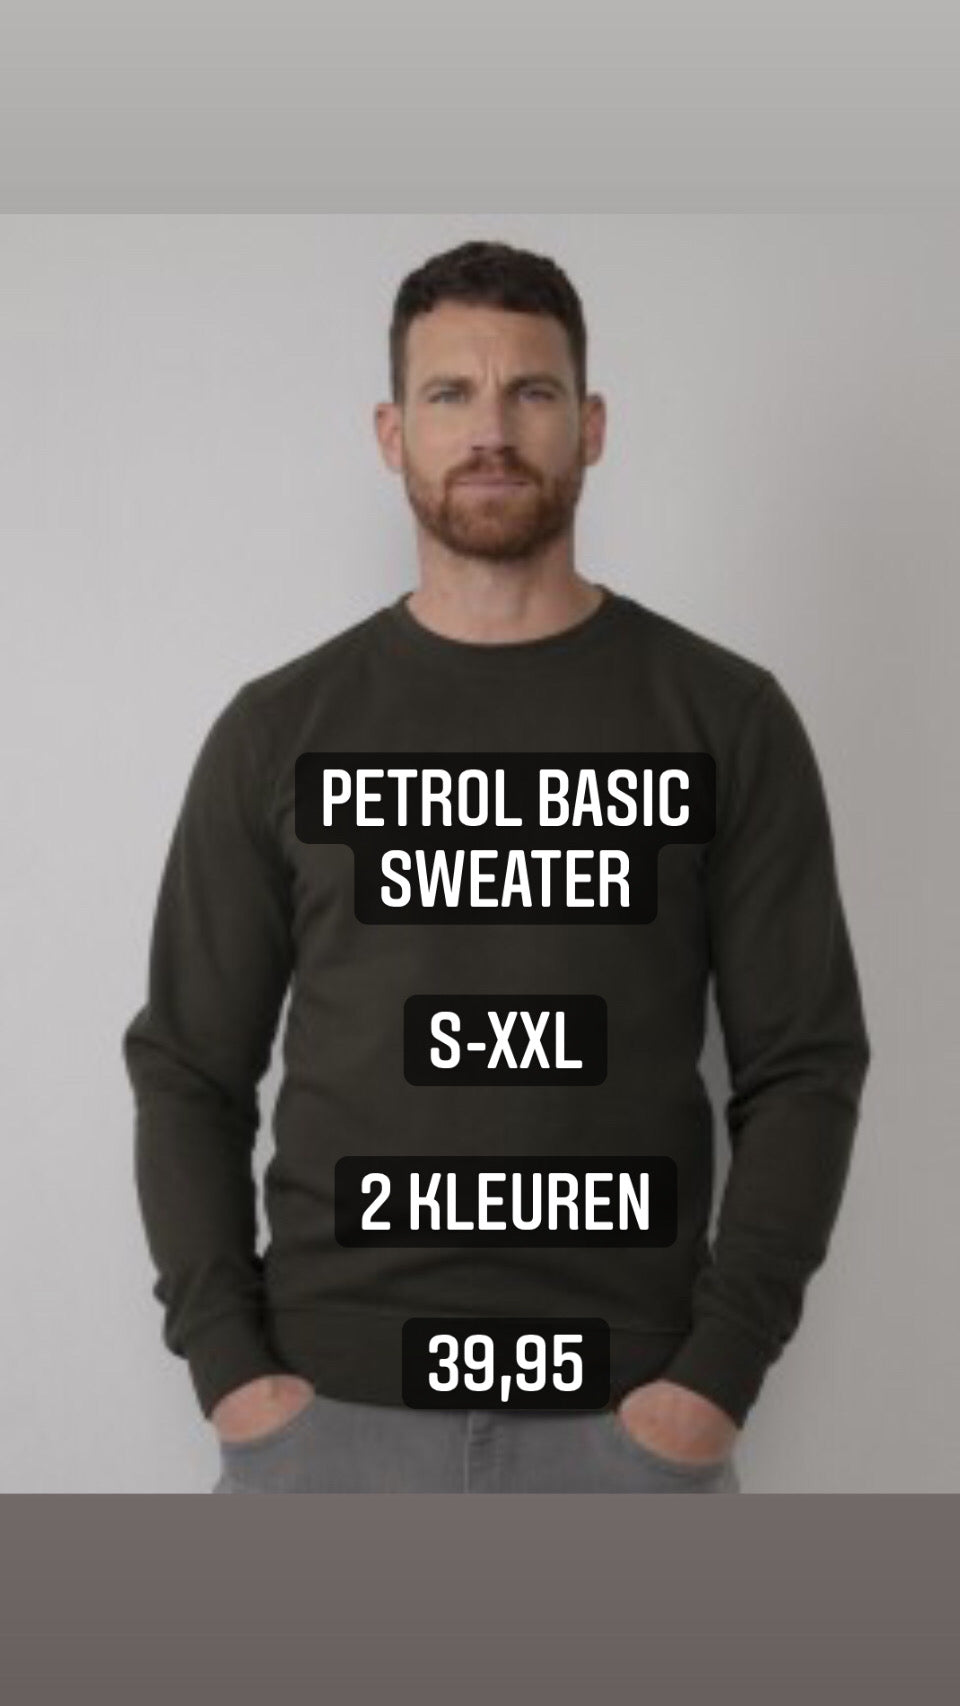 Basic sweater petrol